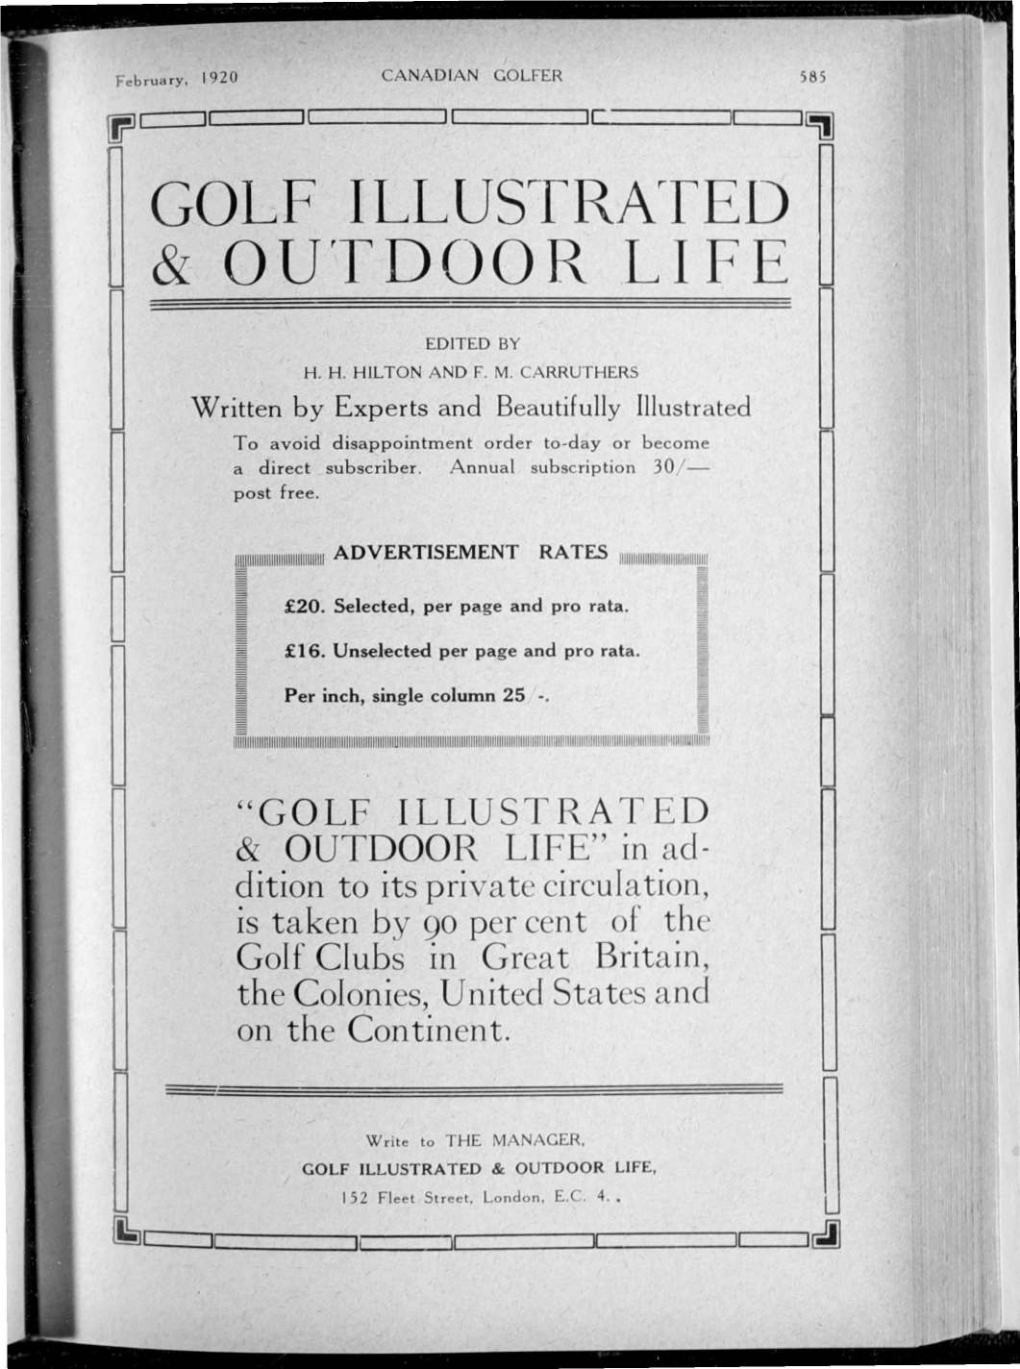 Canadian Golfer, February, 1920